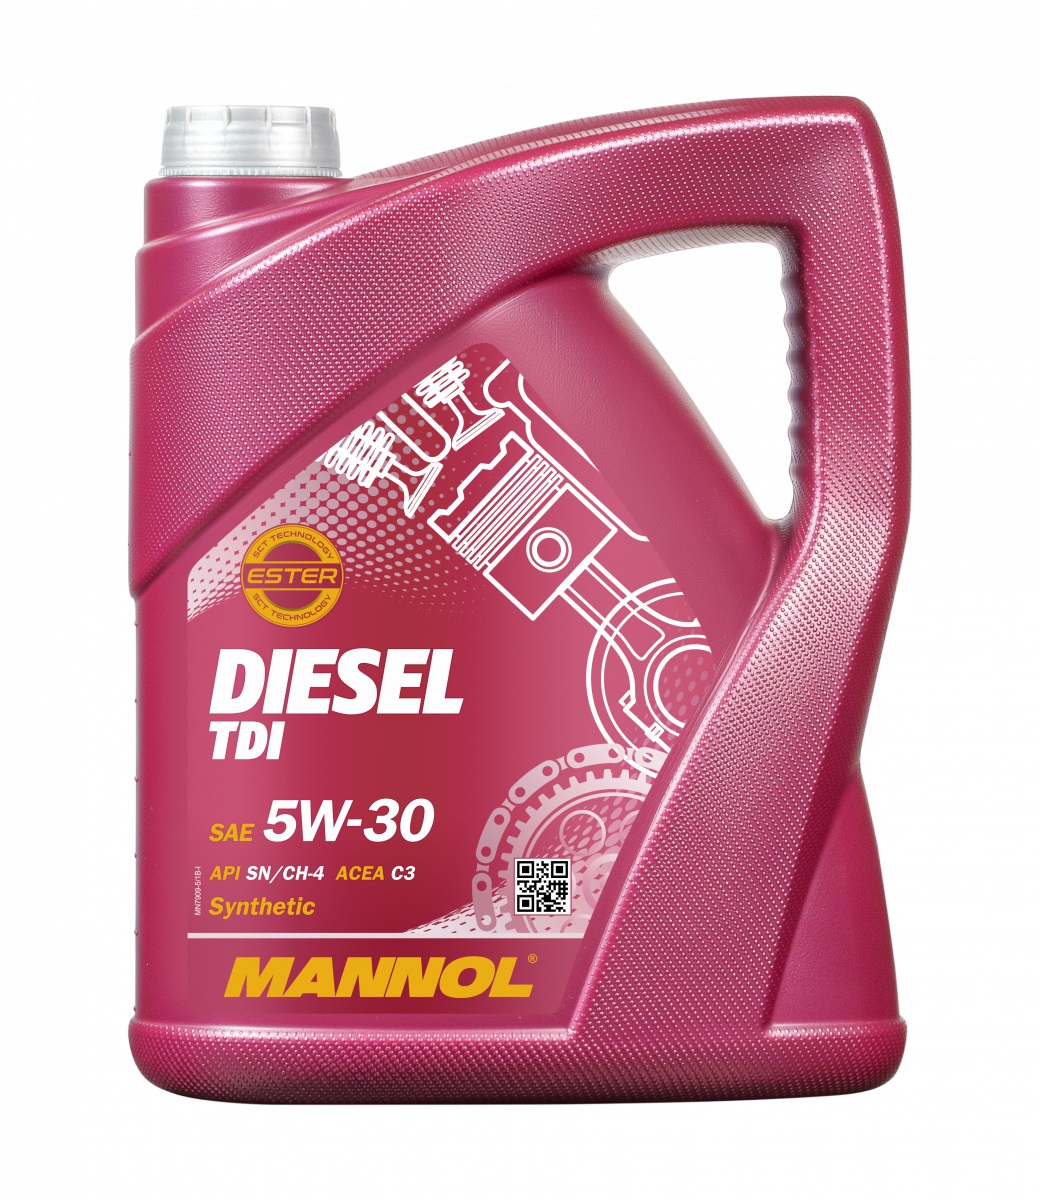 Mannol Diesel TDI 5W-30 Motoröl 5l